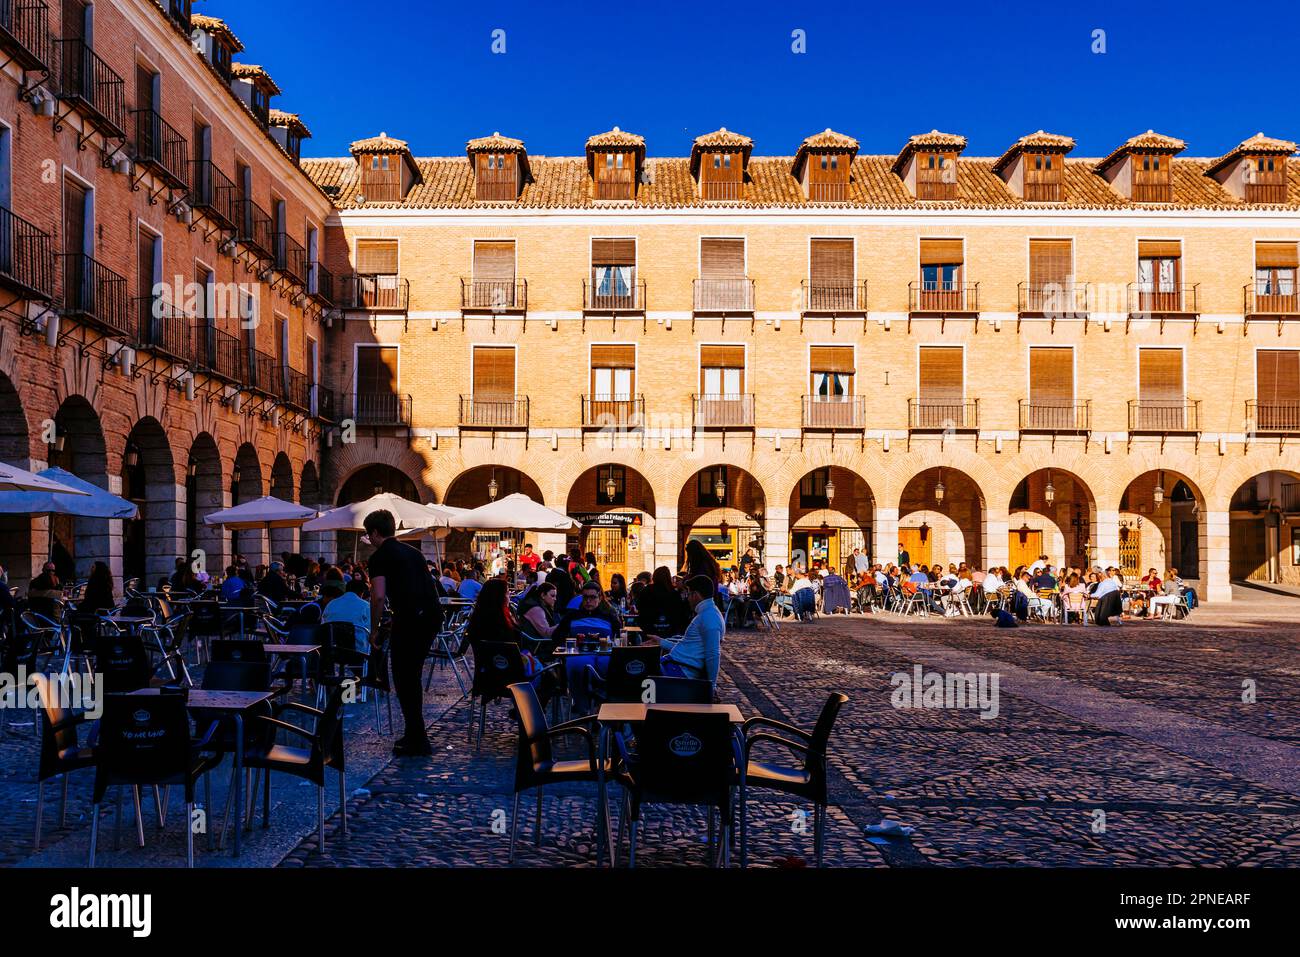 Place principale d'Ocaña - Plaza Mayor. Ocaña, Tolède, Castilla la Mancha, Espagne, Europe. Banque D'Images